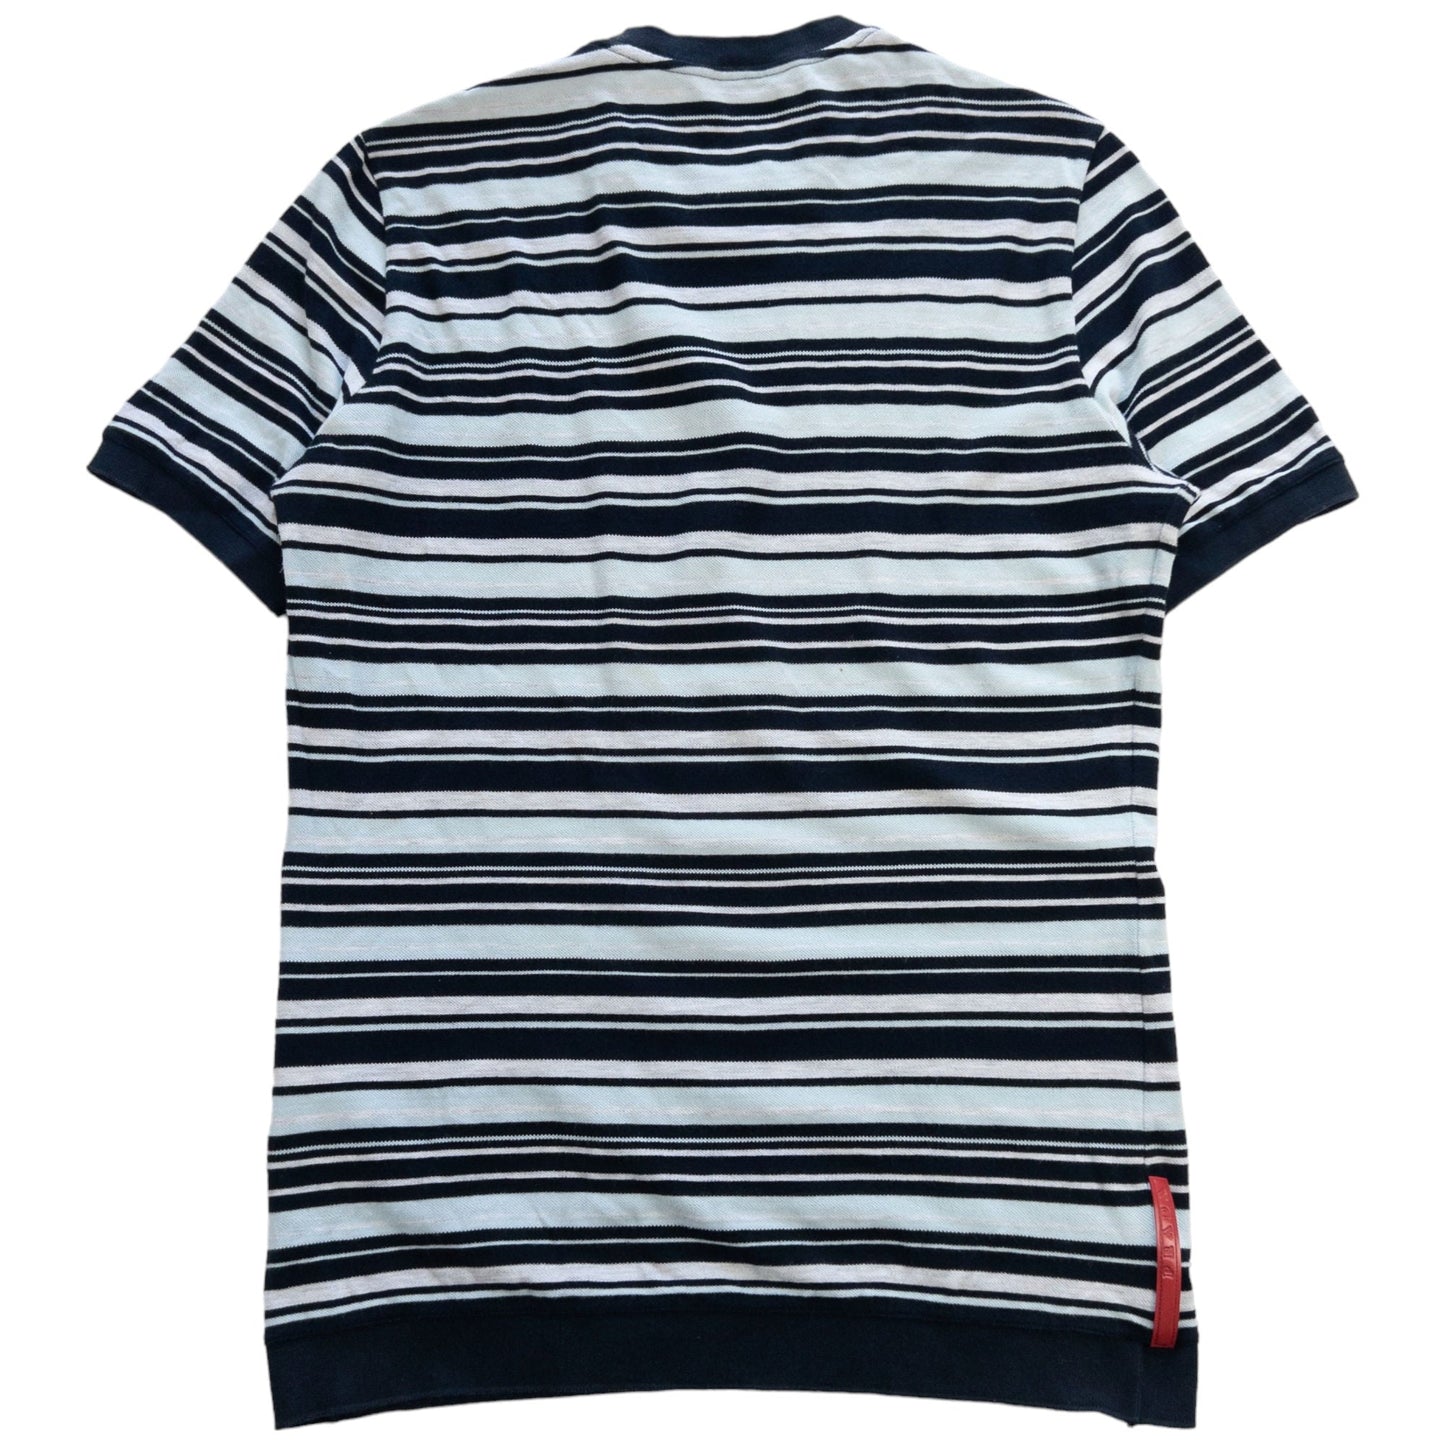 Vintage Prada Striped Sport T Shirt Size S